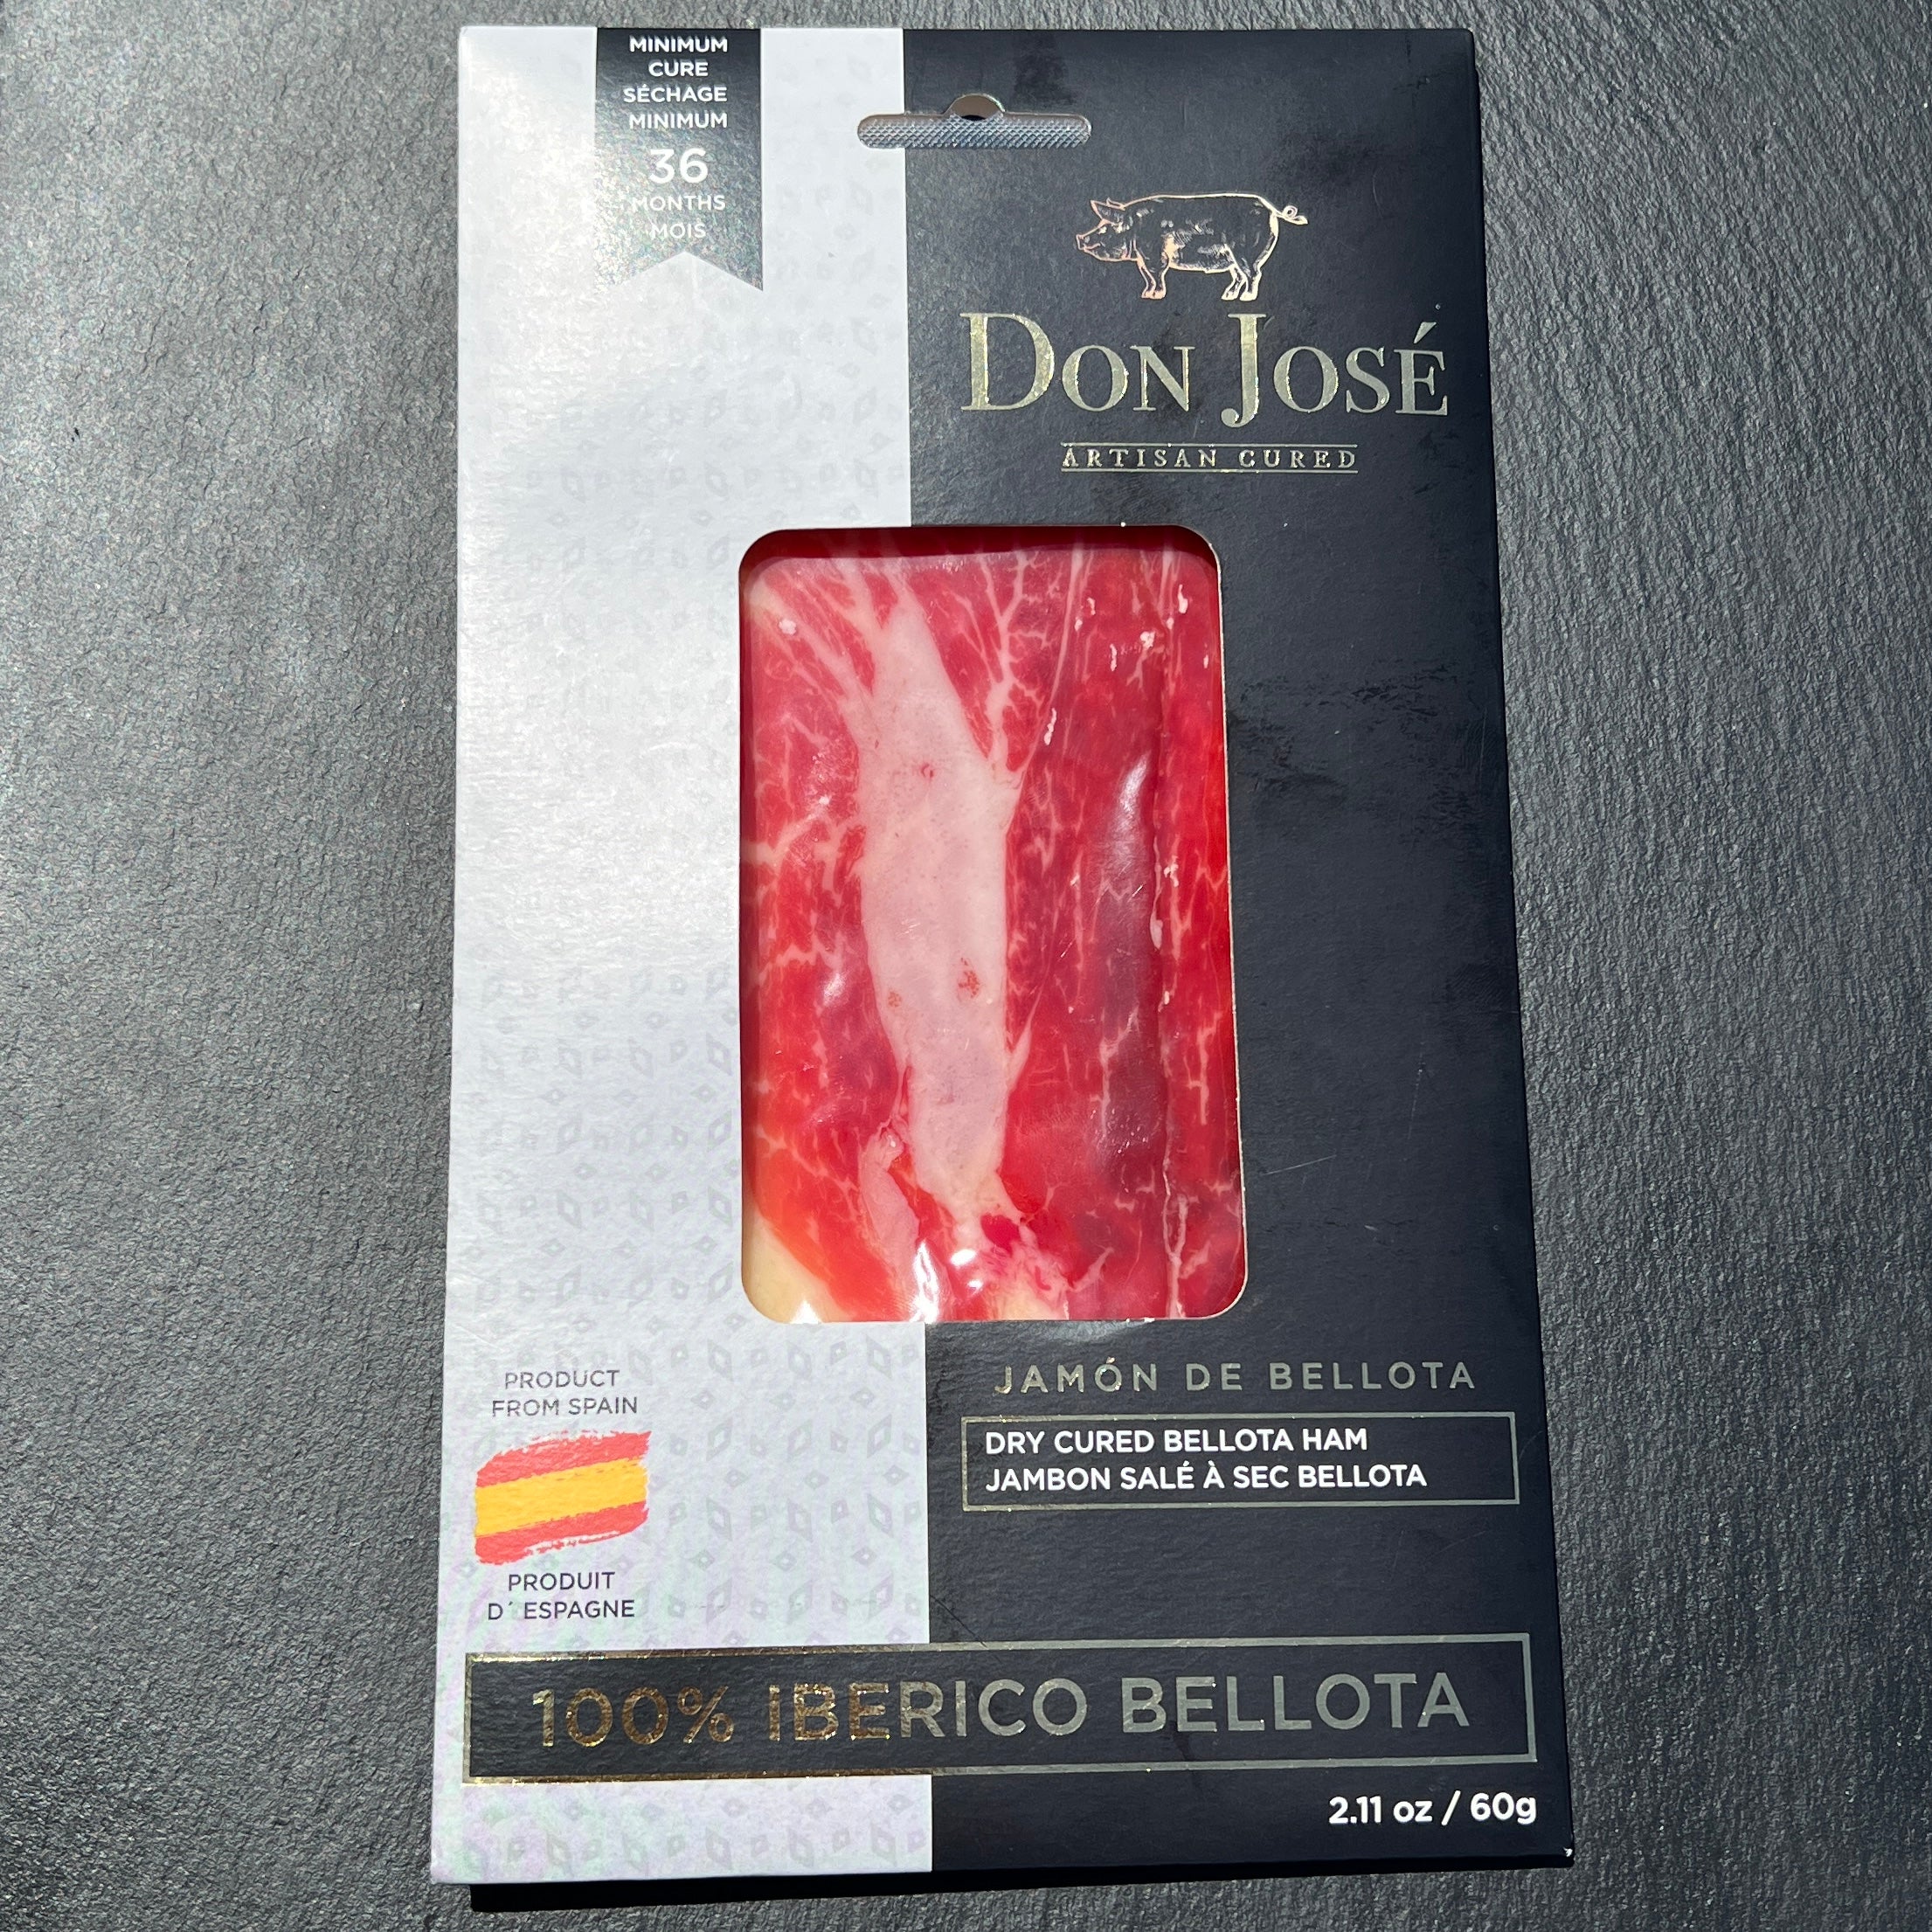 "Don Jose" Dry Cured Bellota Ham